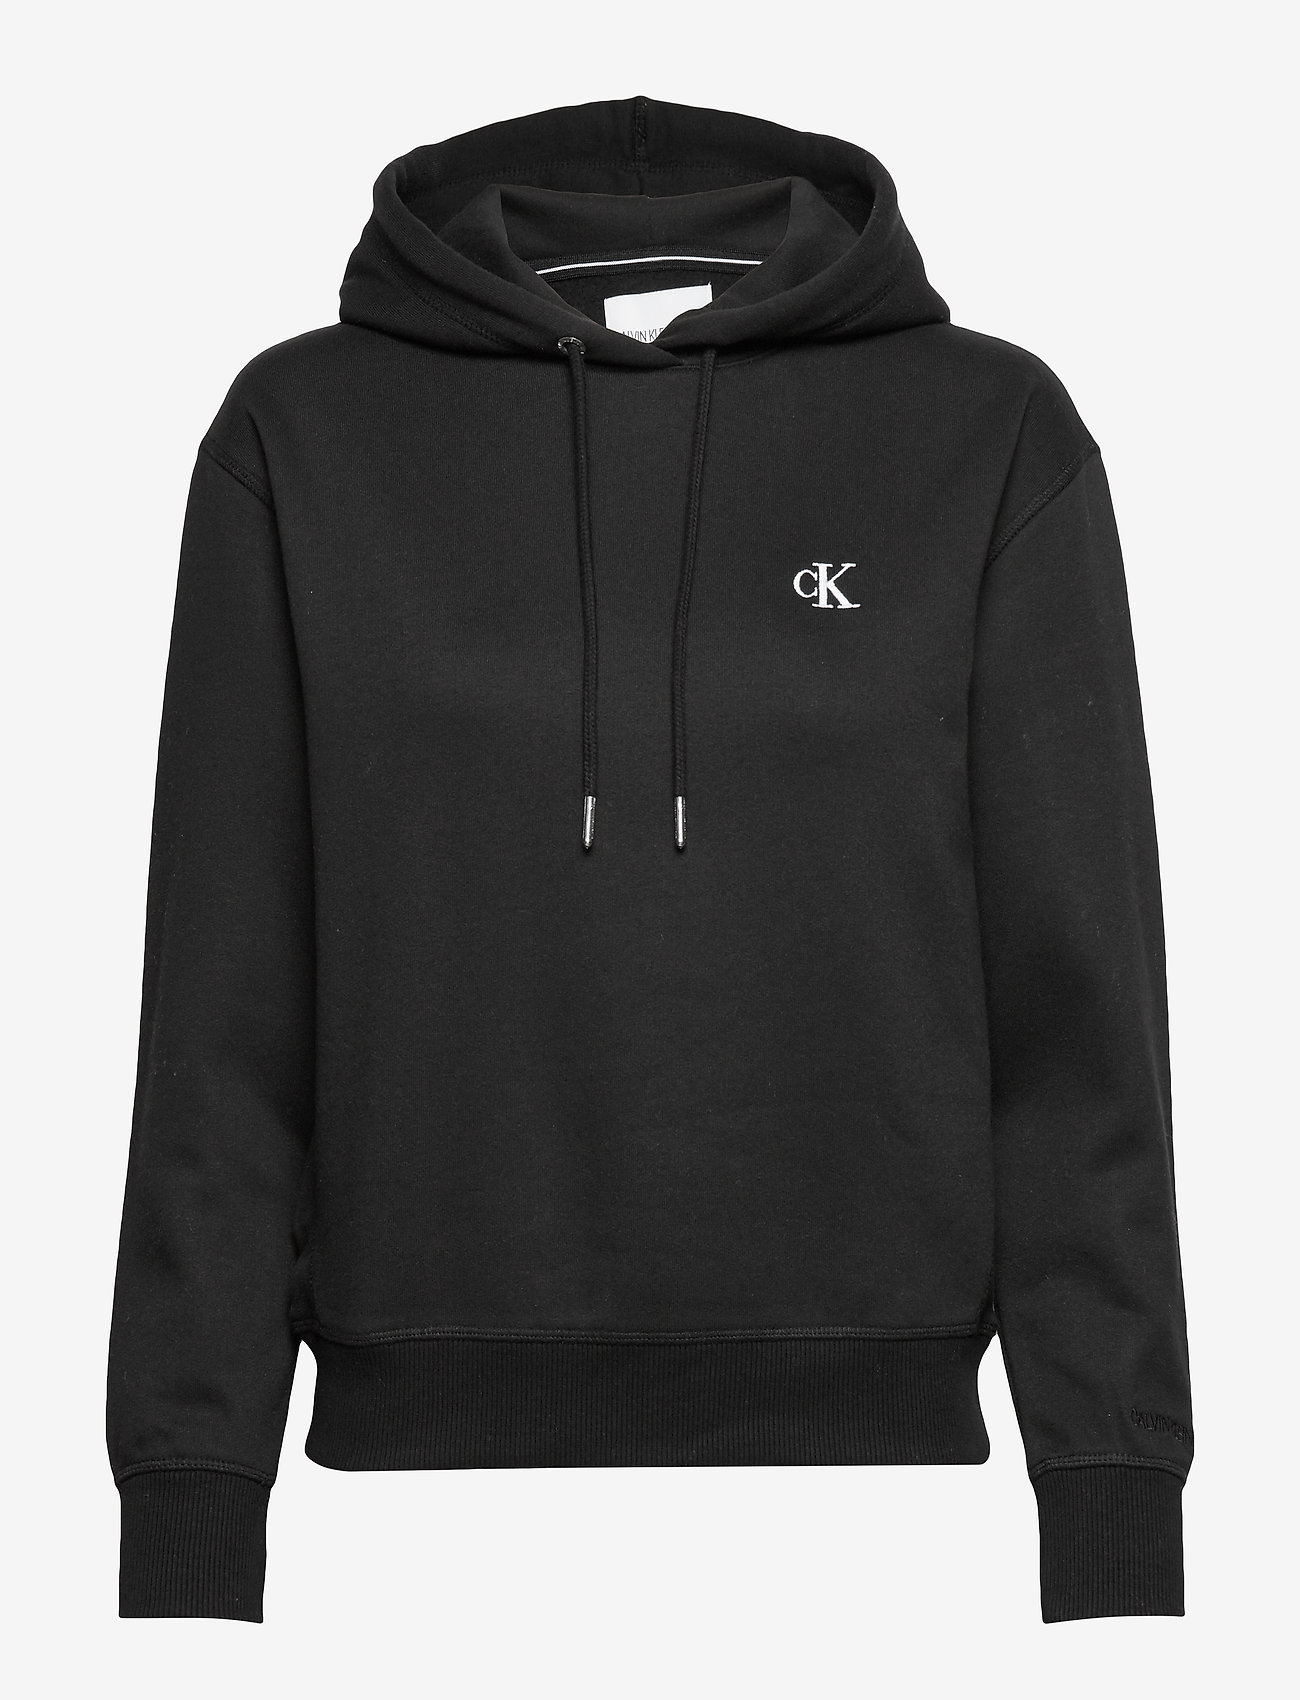 Calvin Klein Jeans Ck Embroidery Hoodie - Sweatshirts | Boozt.com